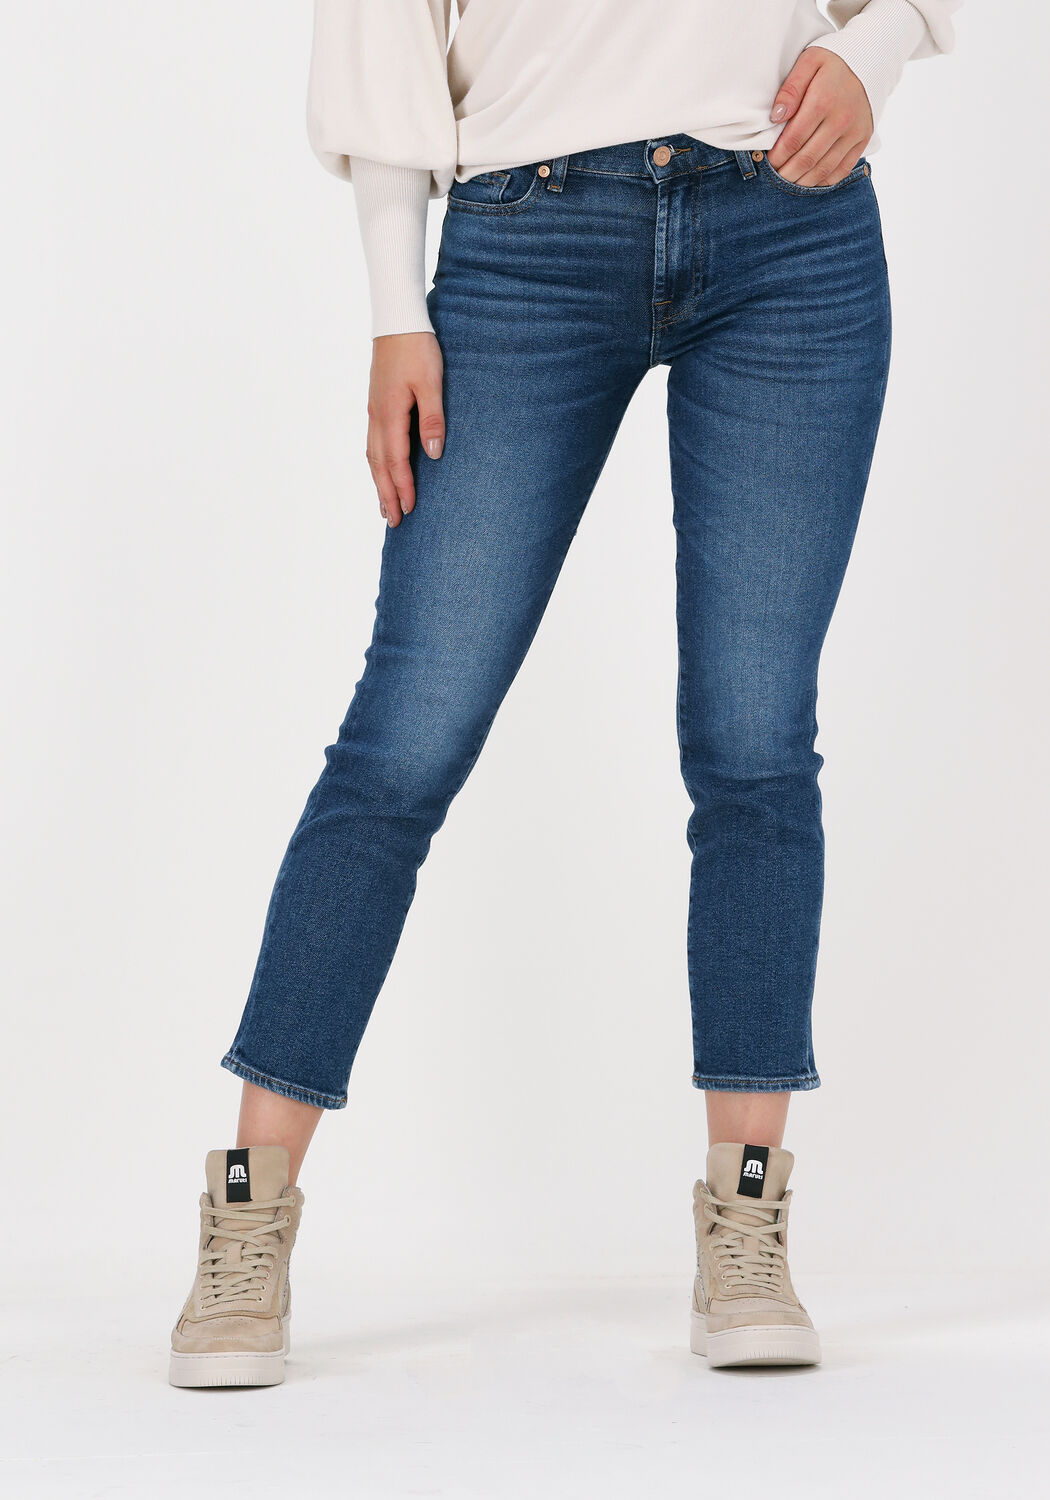 Mode Spijkerbroeken Slim jeans 7 For All Mankind Slim jeans blauw gewassen uitstraling 